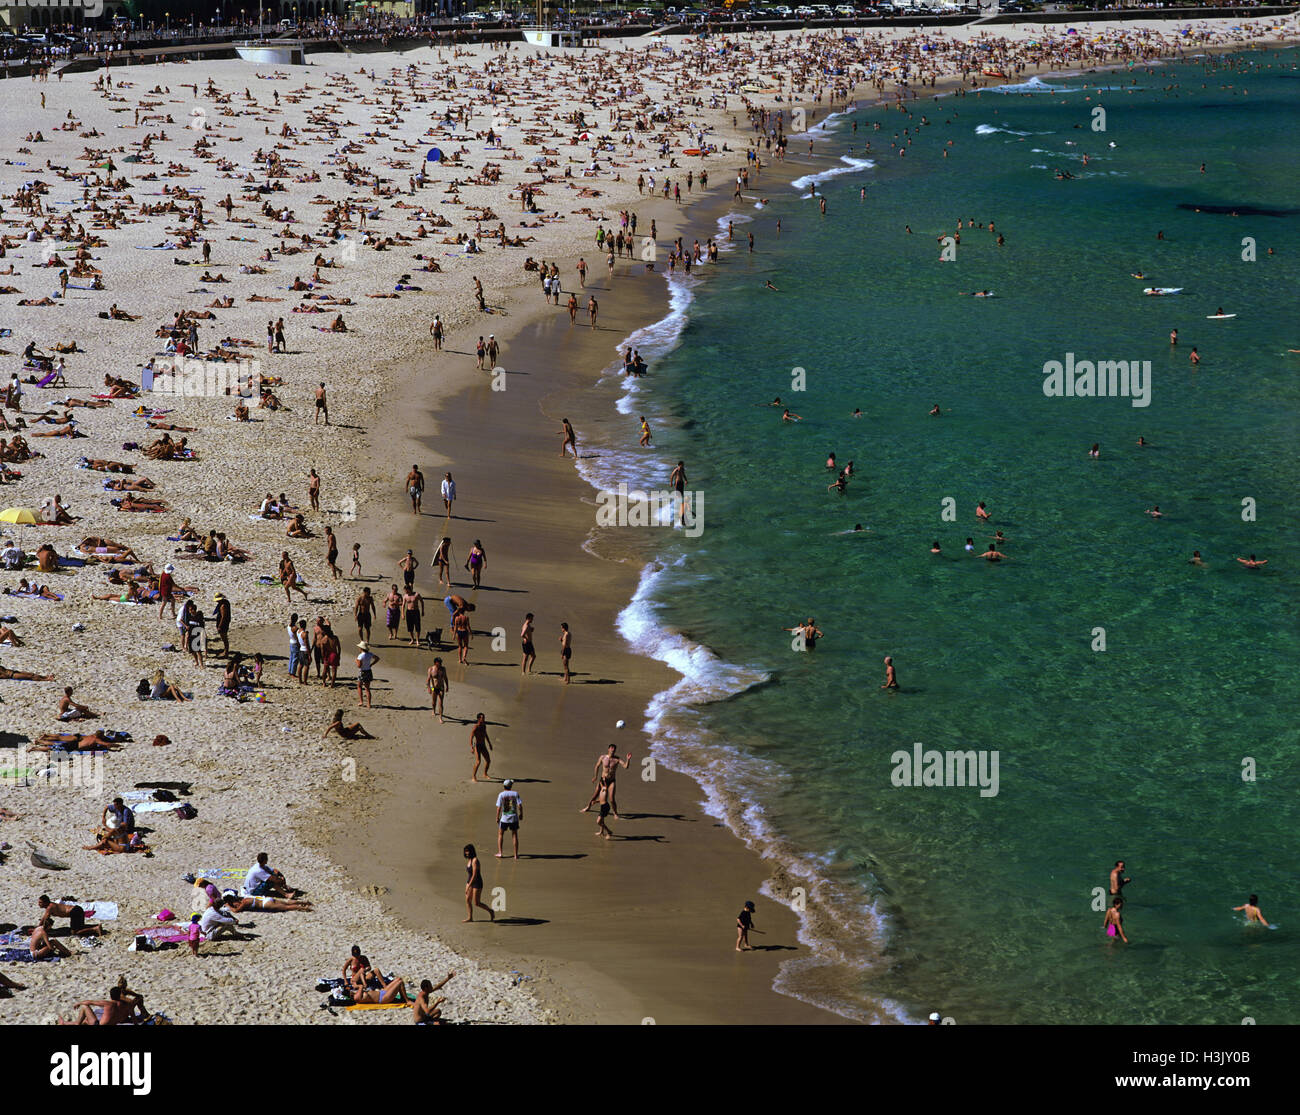 Bondi Beach, aerial photograph with large crowd of beachgoers. Stock Photo